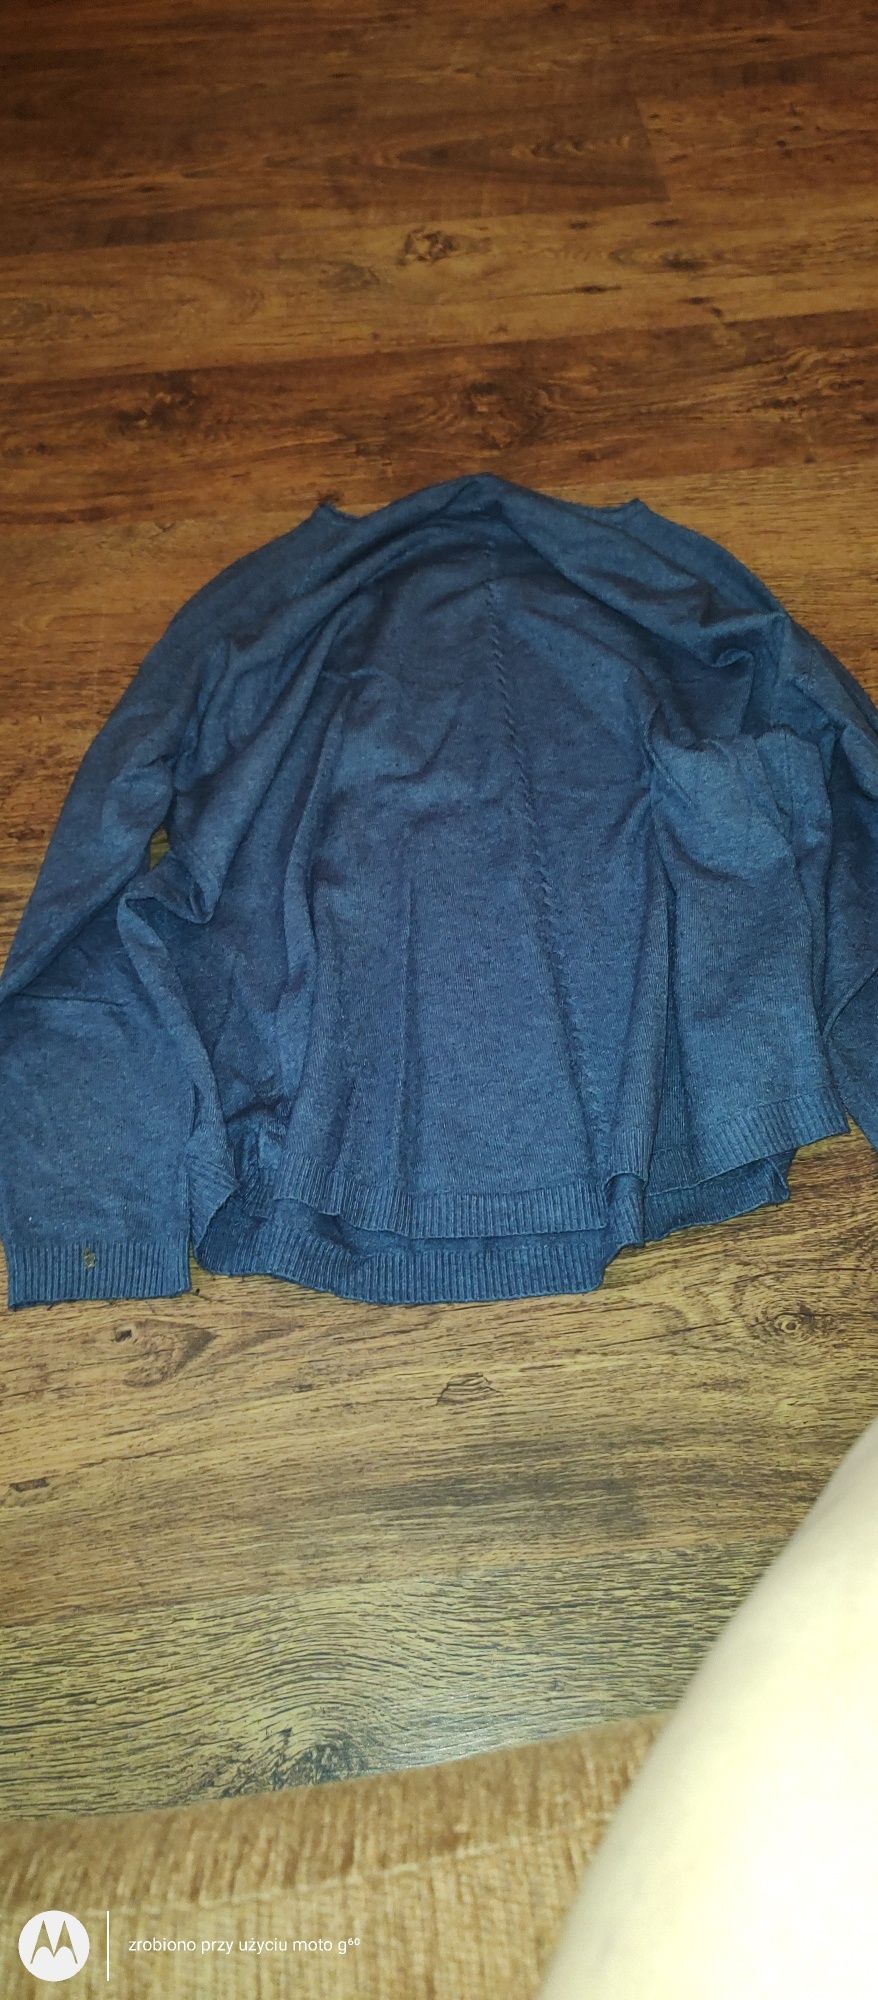 Damski niebieski sweterek